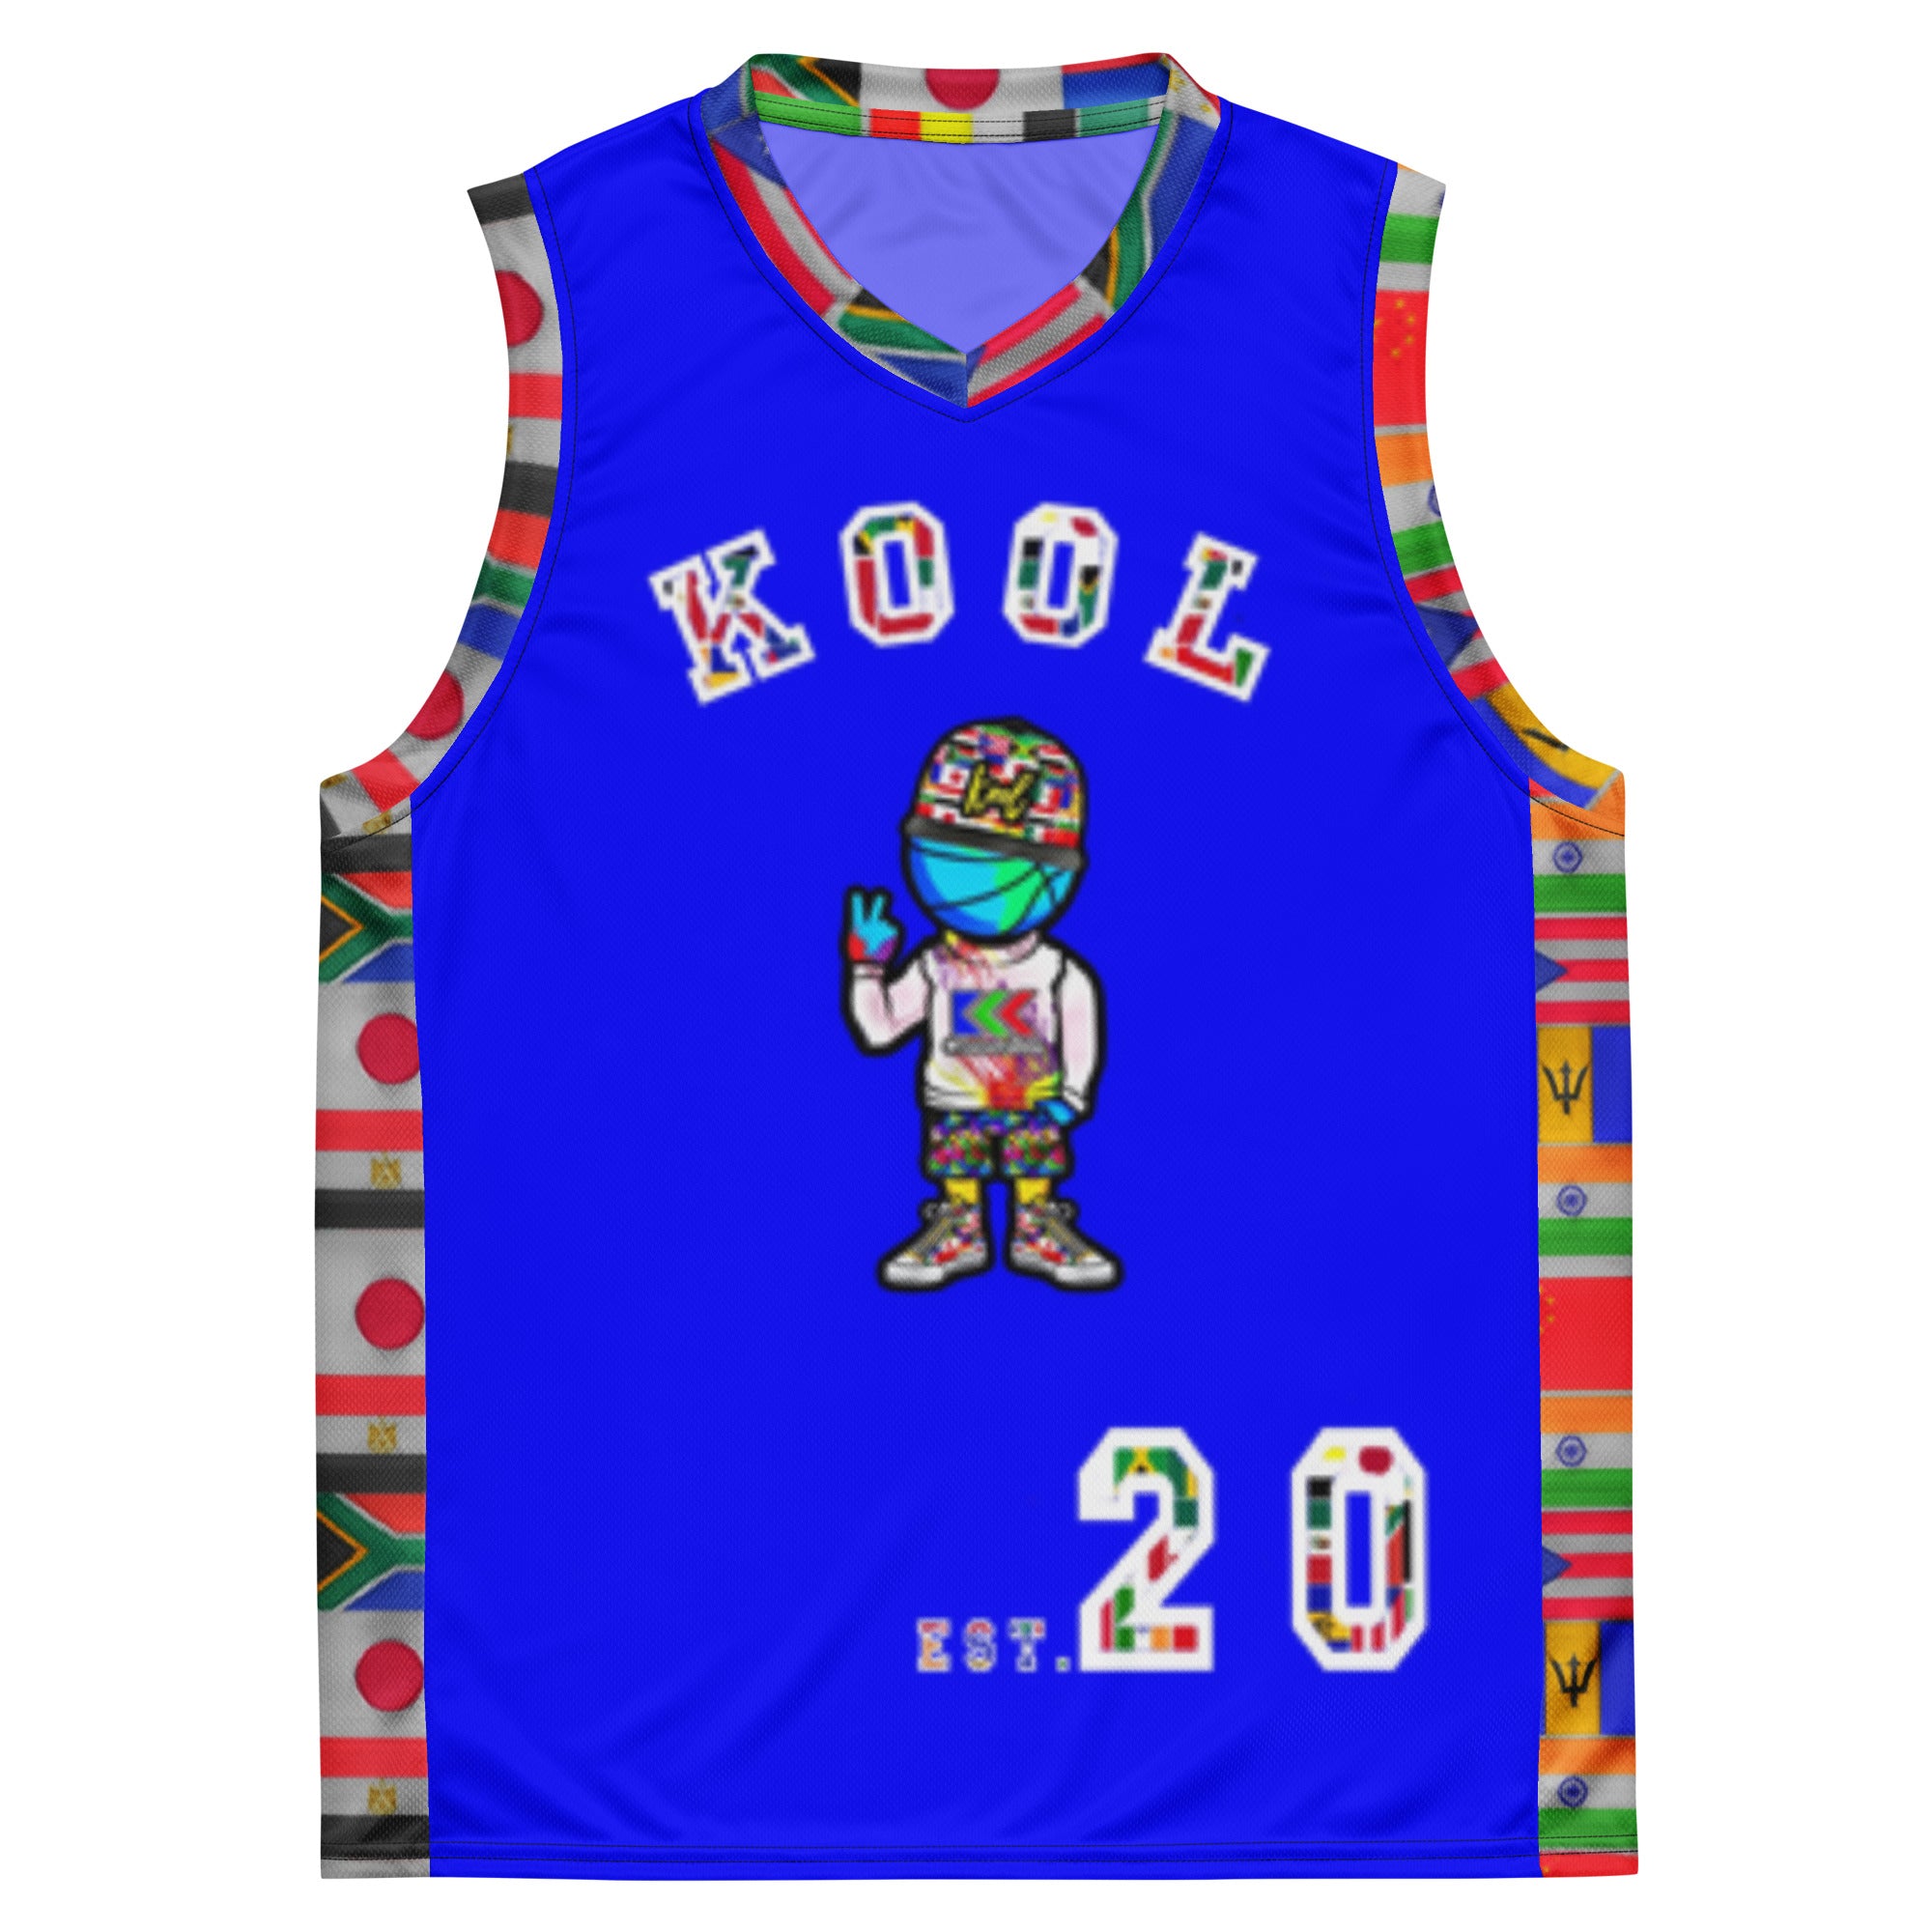 Kool Kid recycled basketball jersey